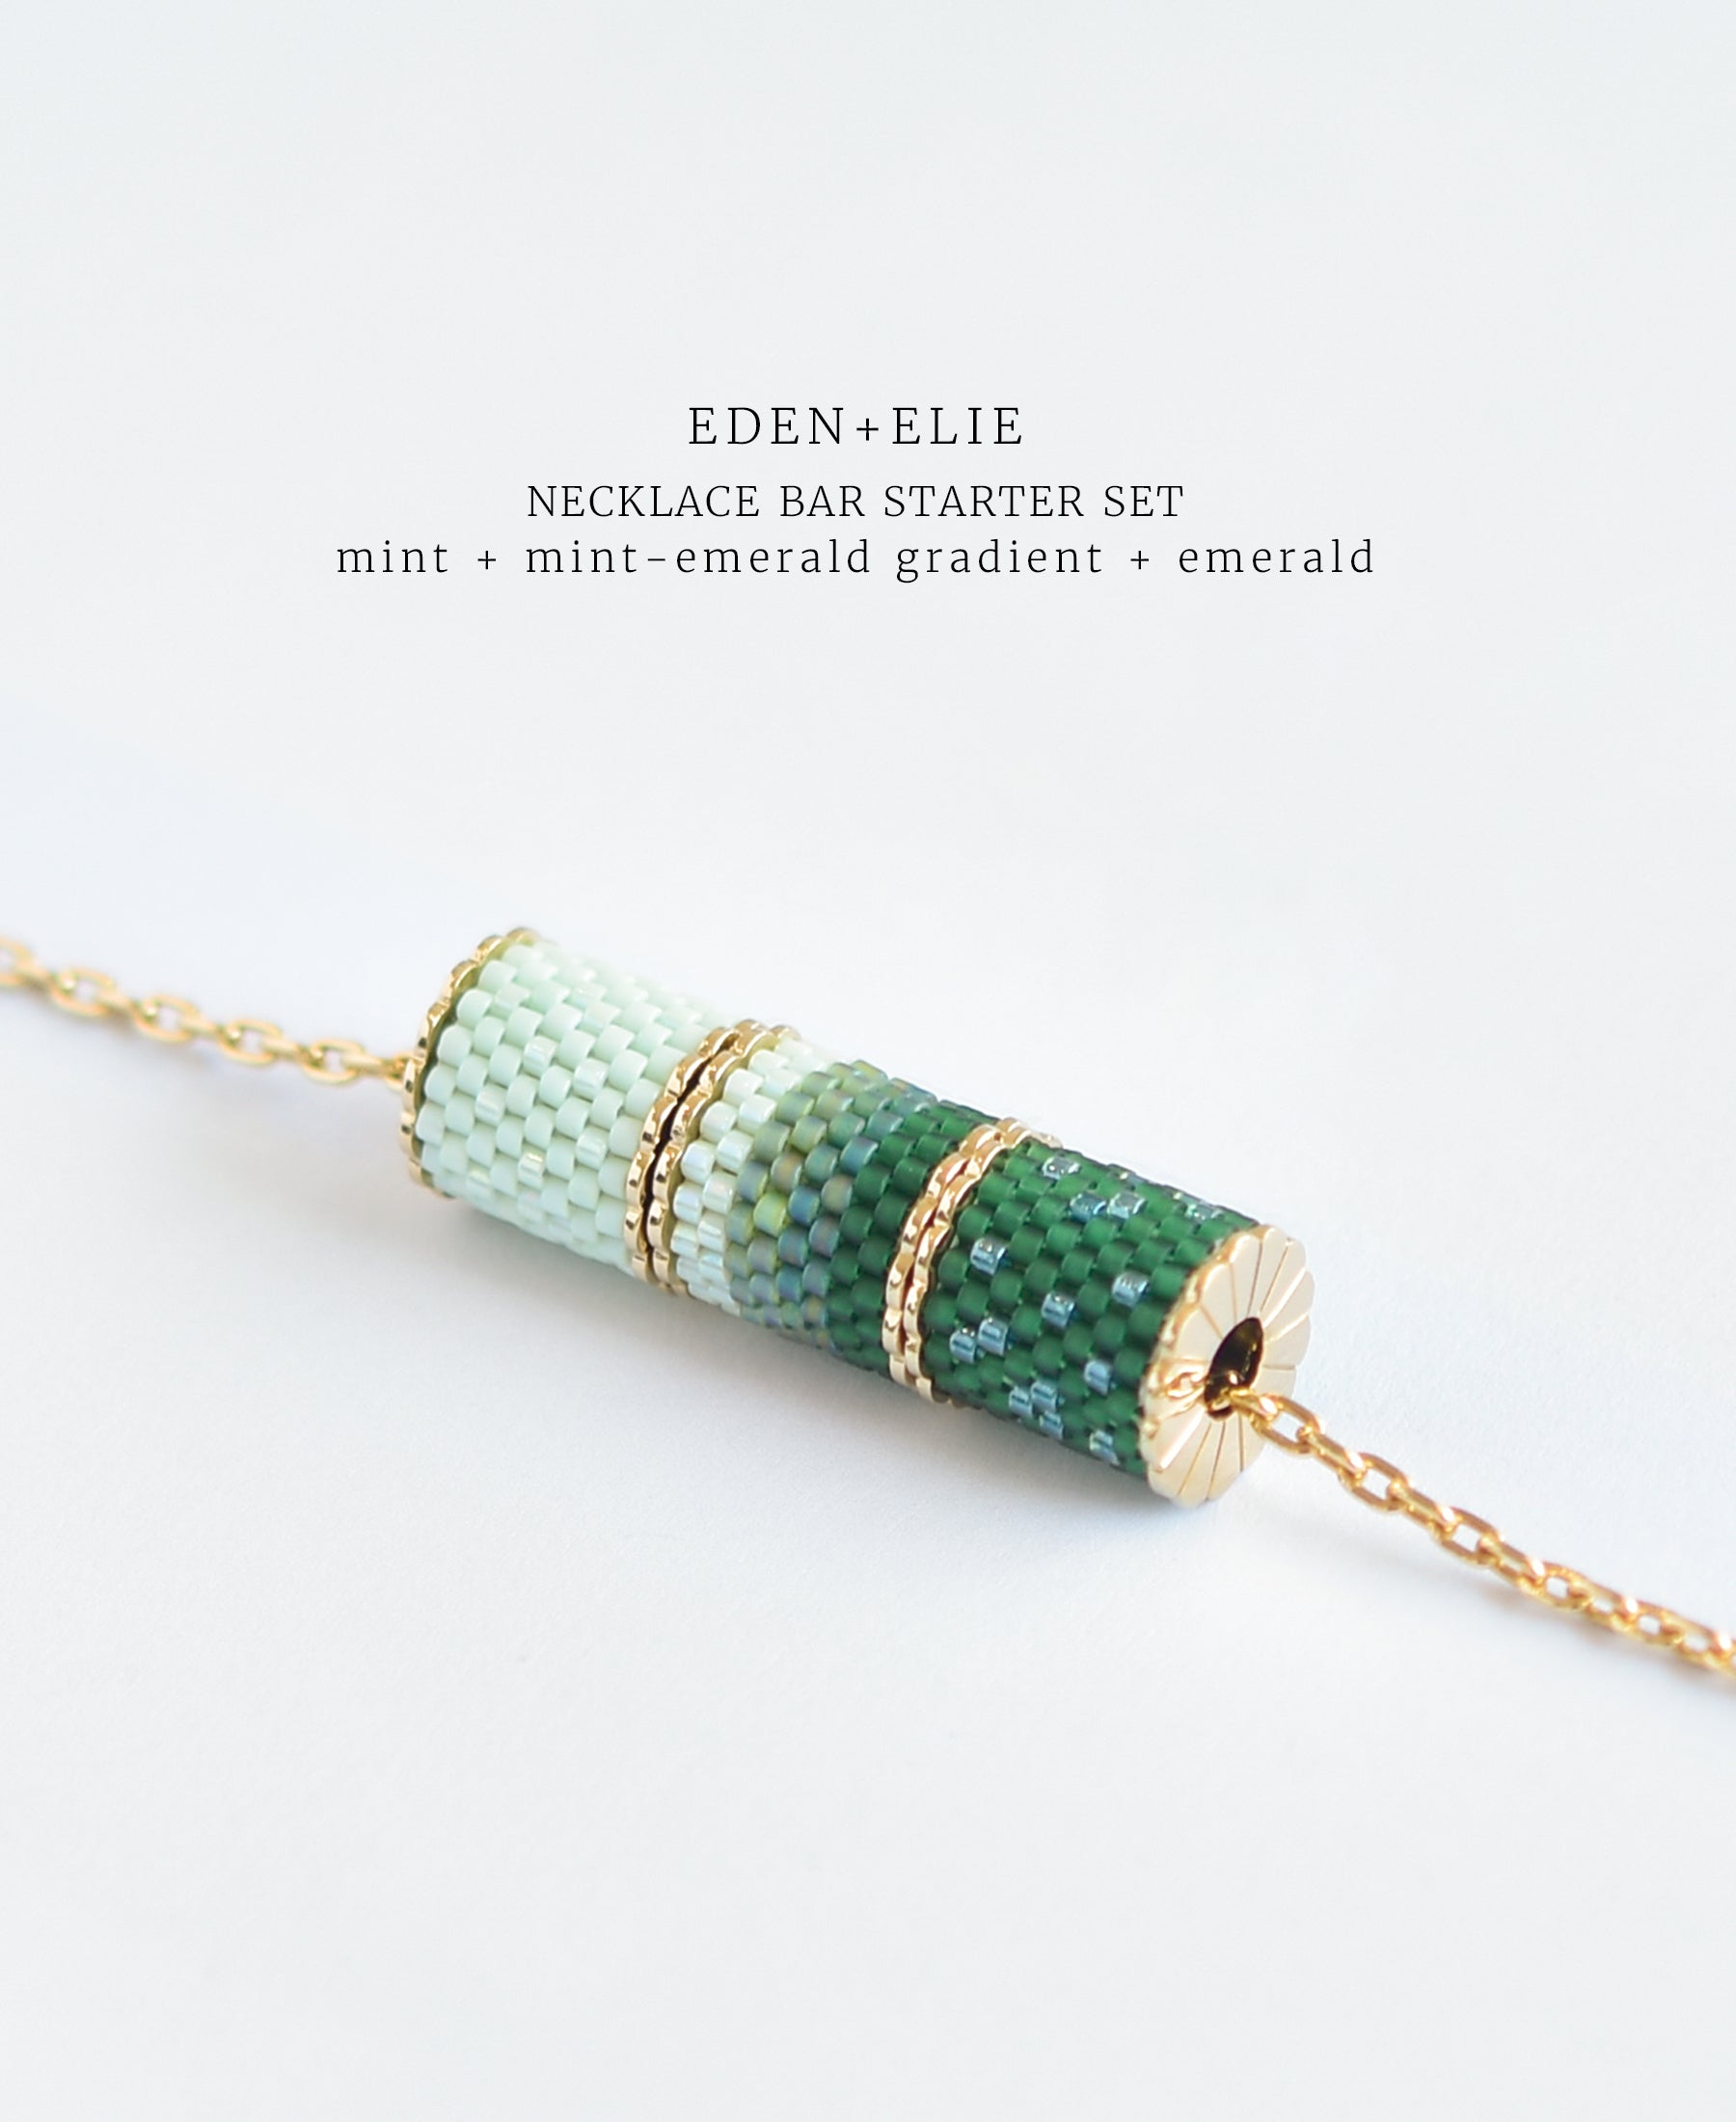 EDEN + ELIE Necklace Bar 3 bead starter set - mint emerald gradient